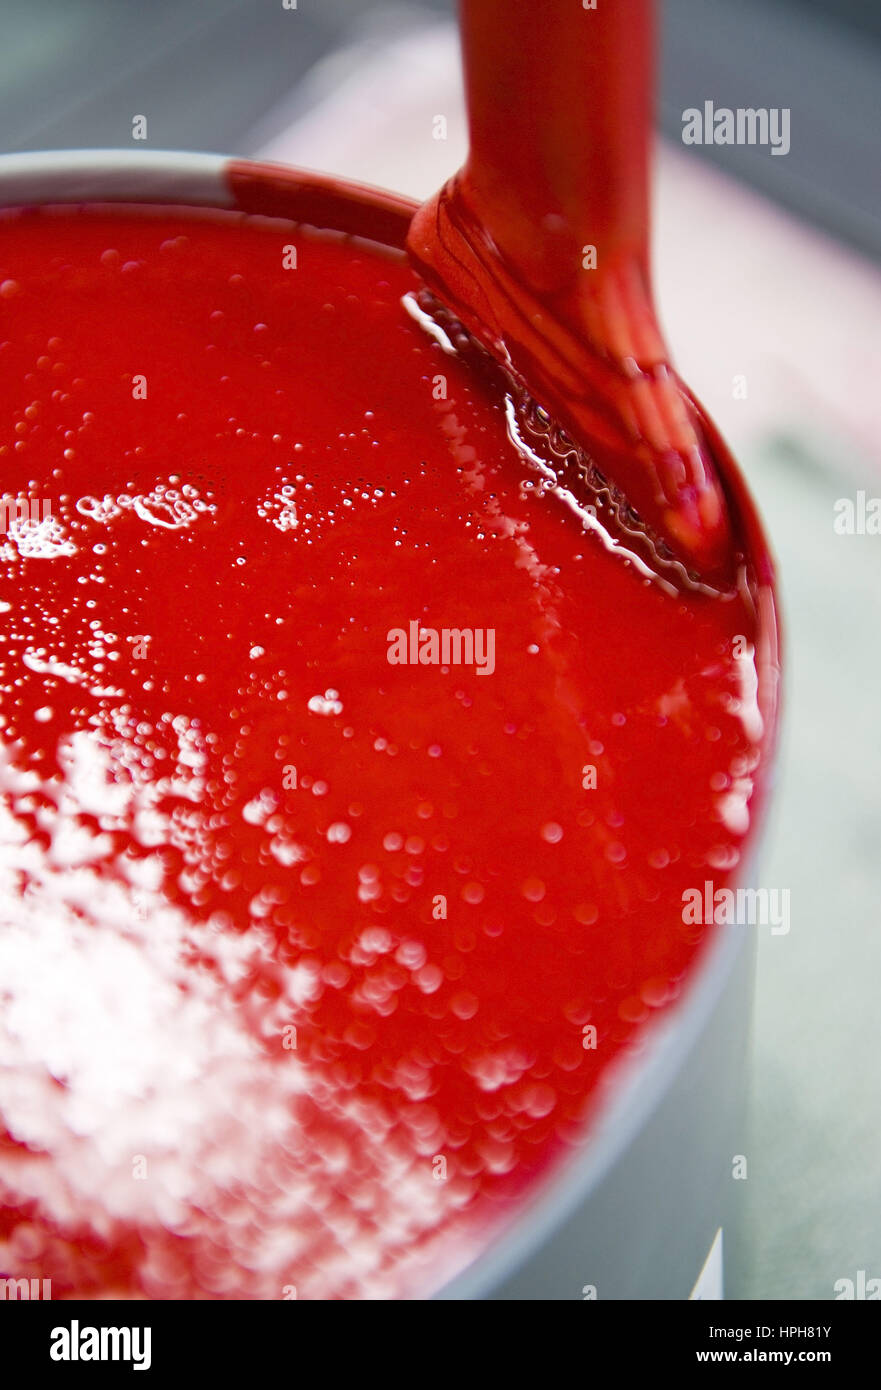 Roter Farbtopf, Druckfarbe - red paint pot in printing company Stock Photo